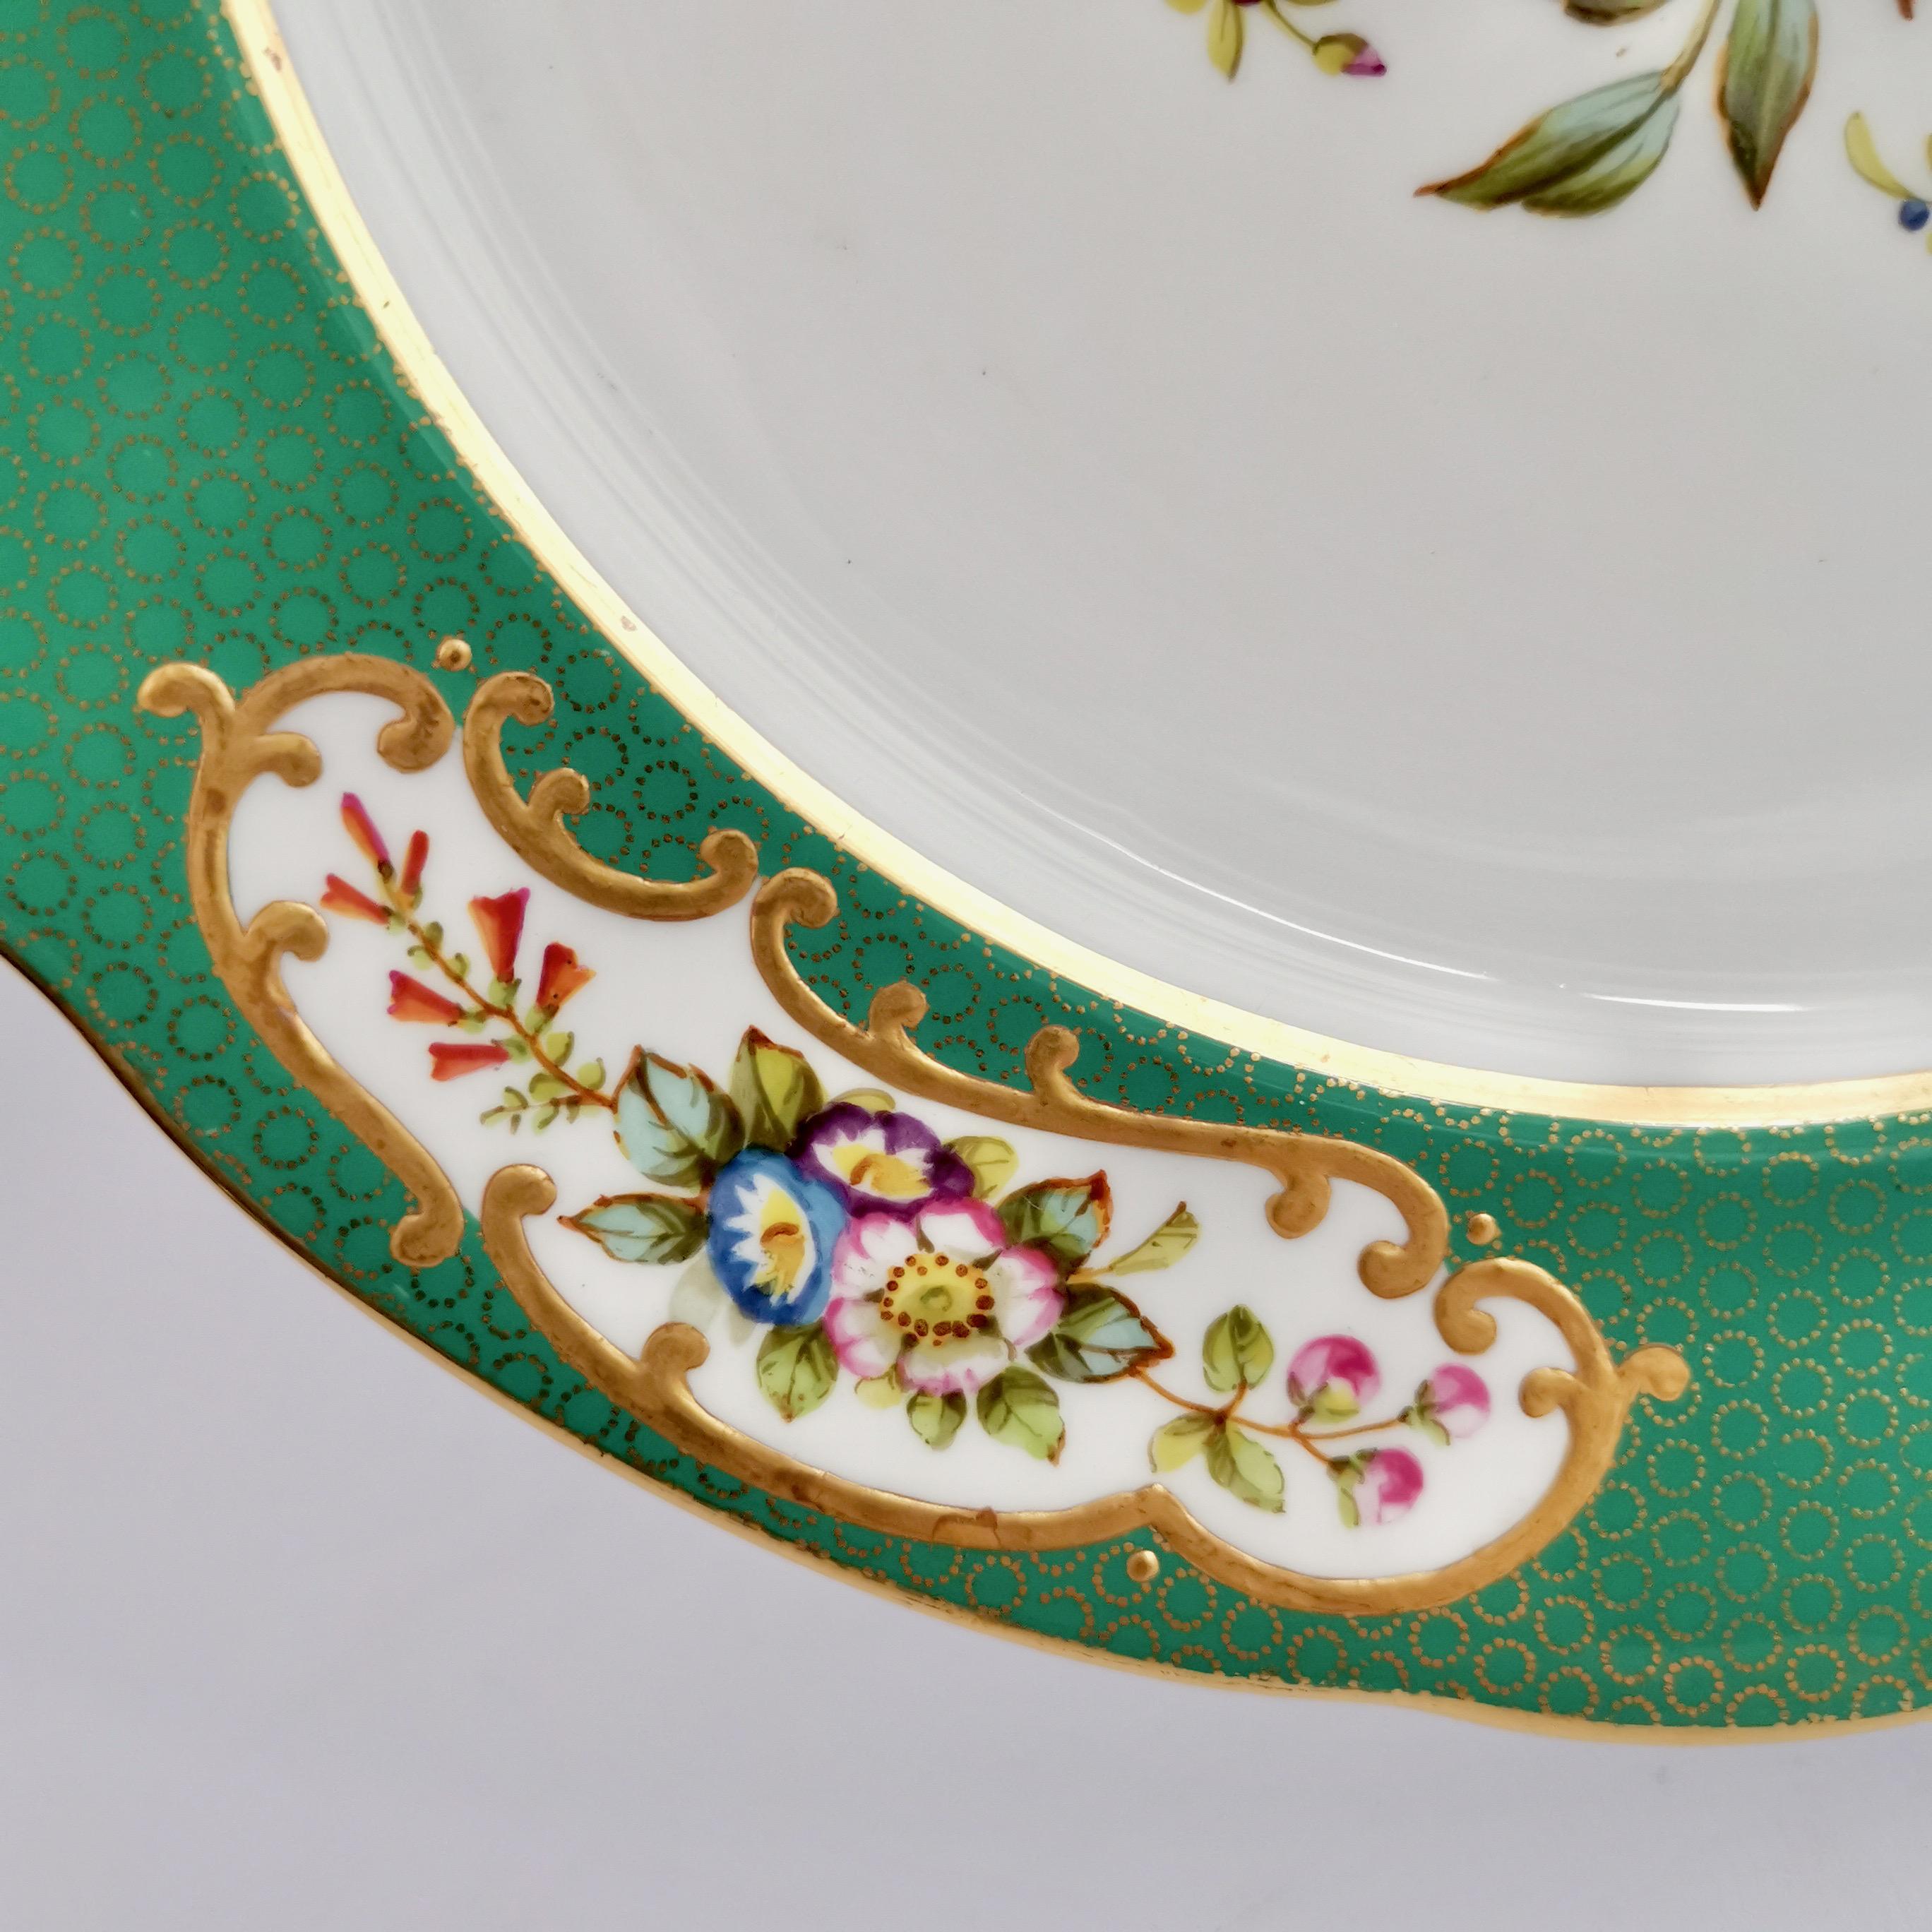 Rococo Copeland Spode Porcelain Plate, Green Sèvres Style, Flowers, Thomas Goode, 1924